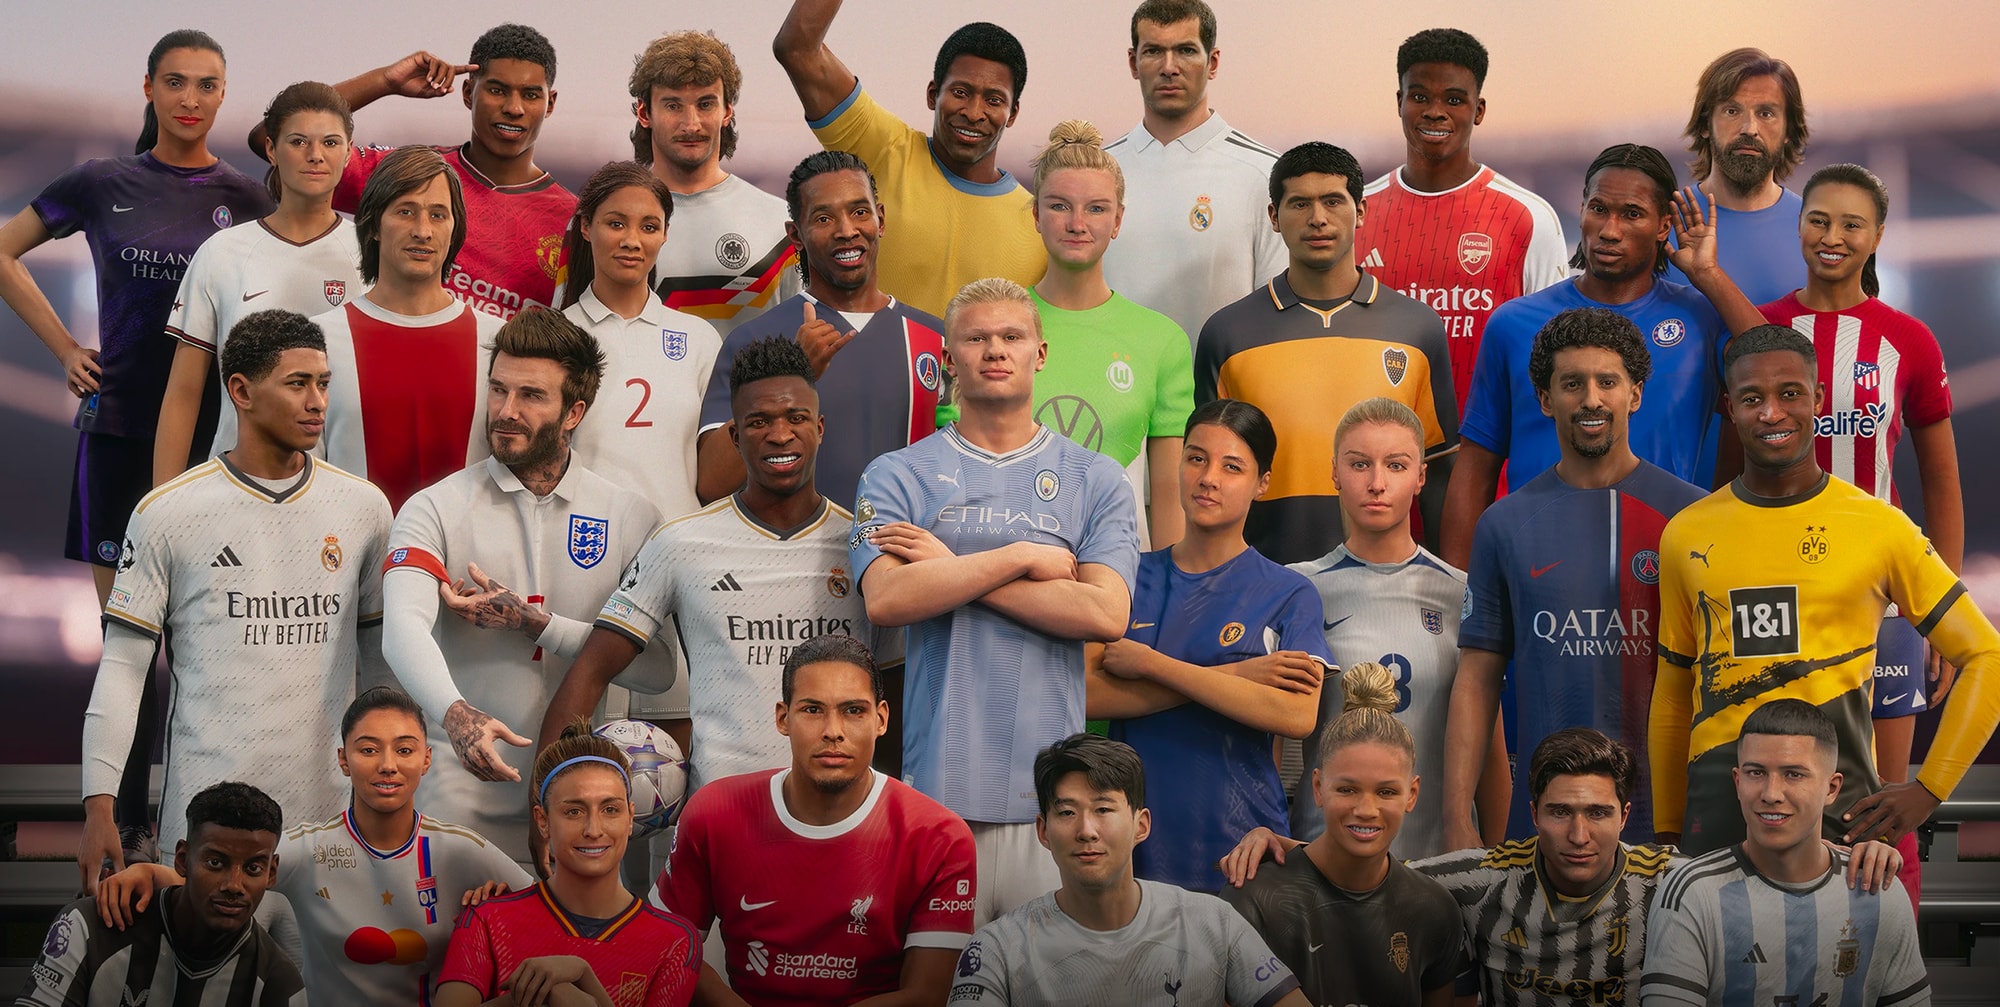 EA Sports FC 24 Review